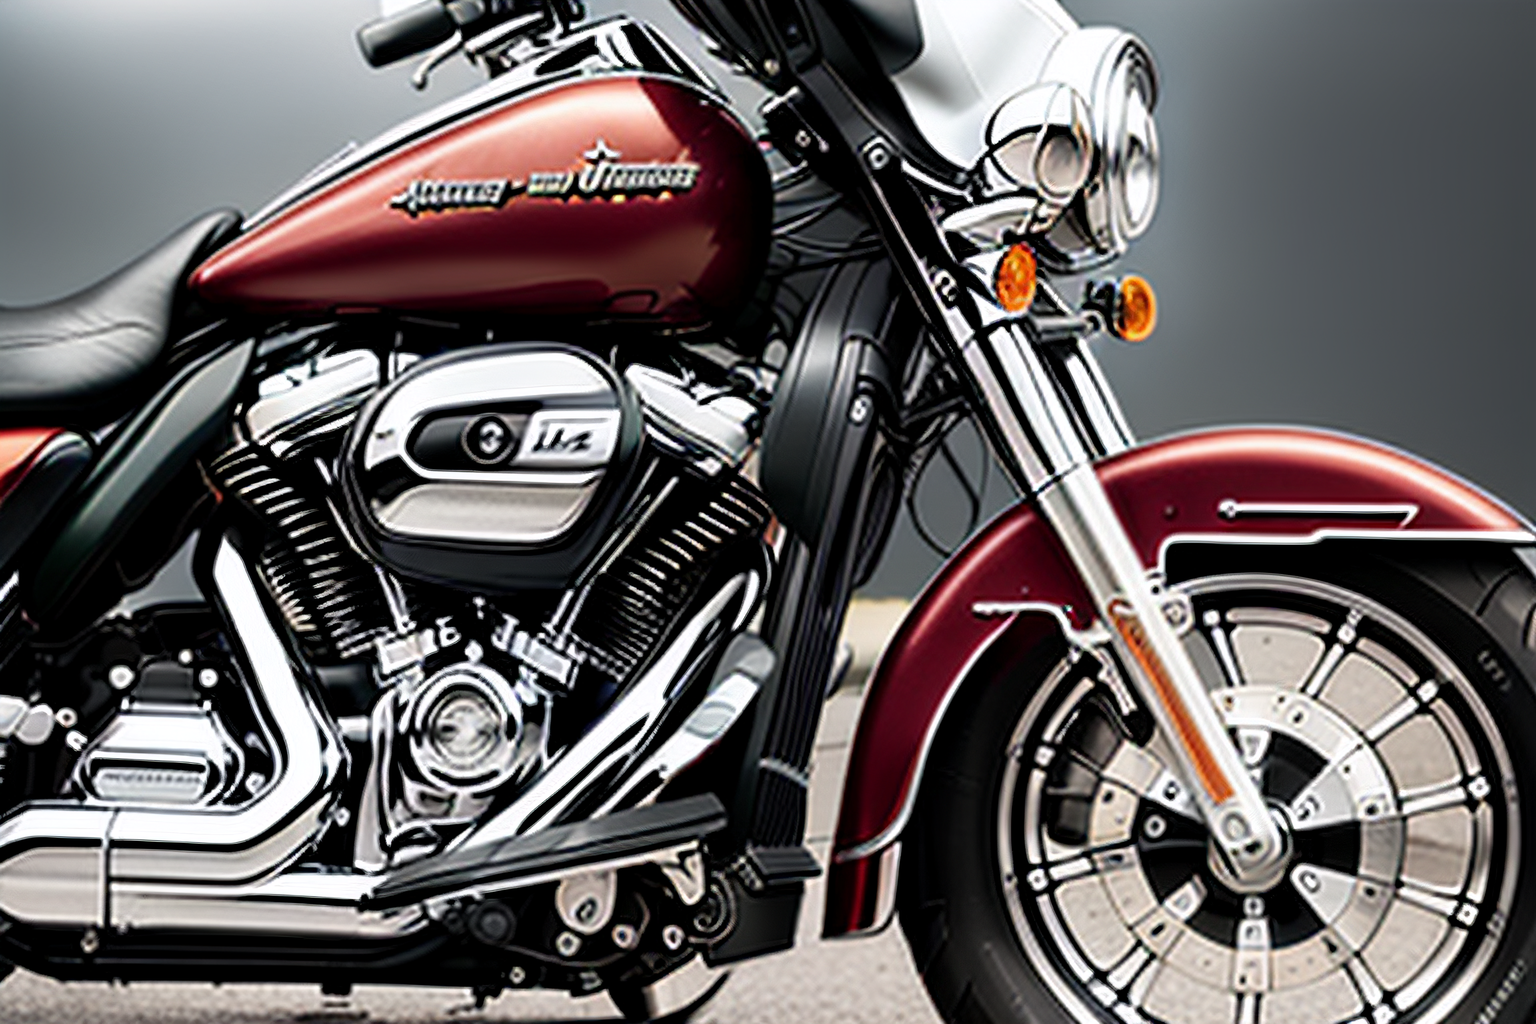 2014 Harley Davidson Limited Problems: Overview